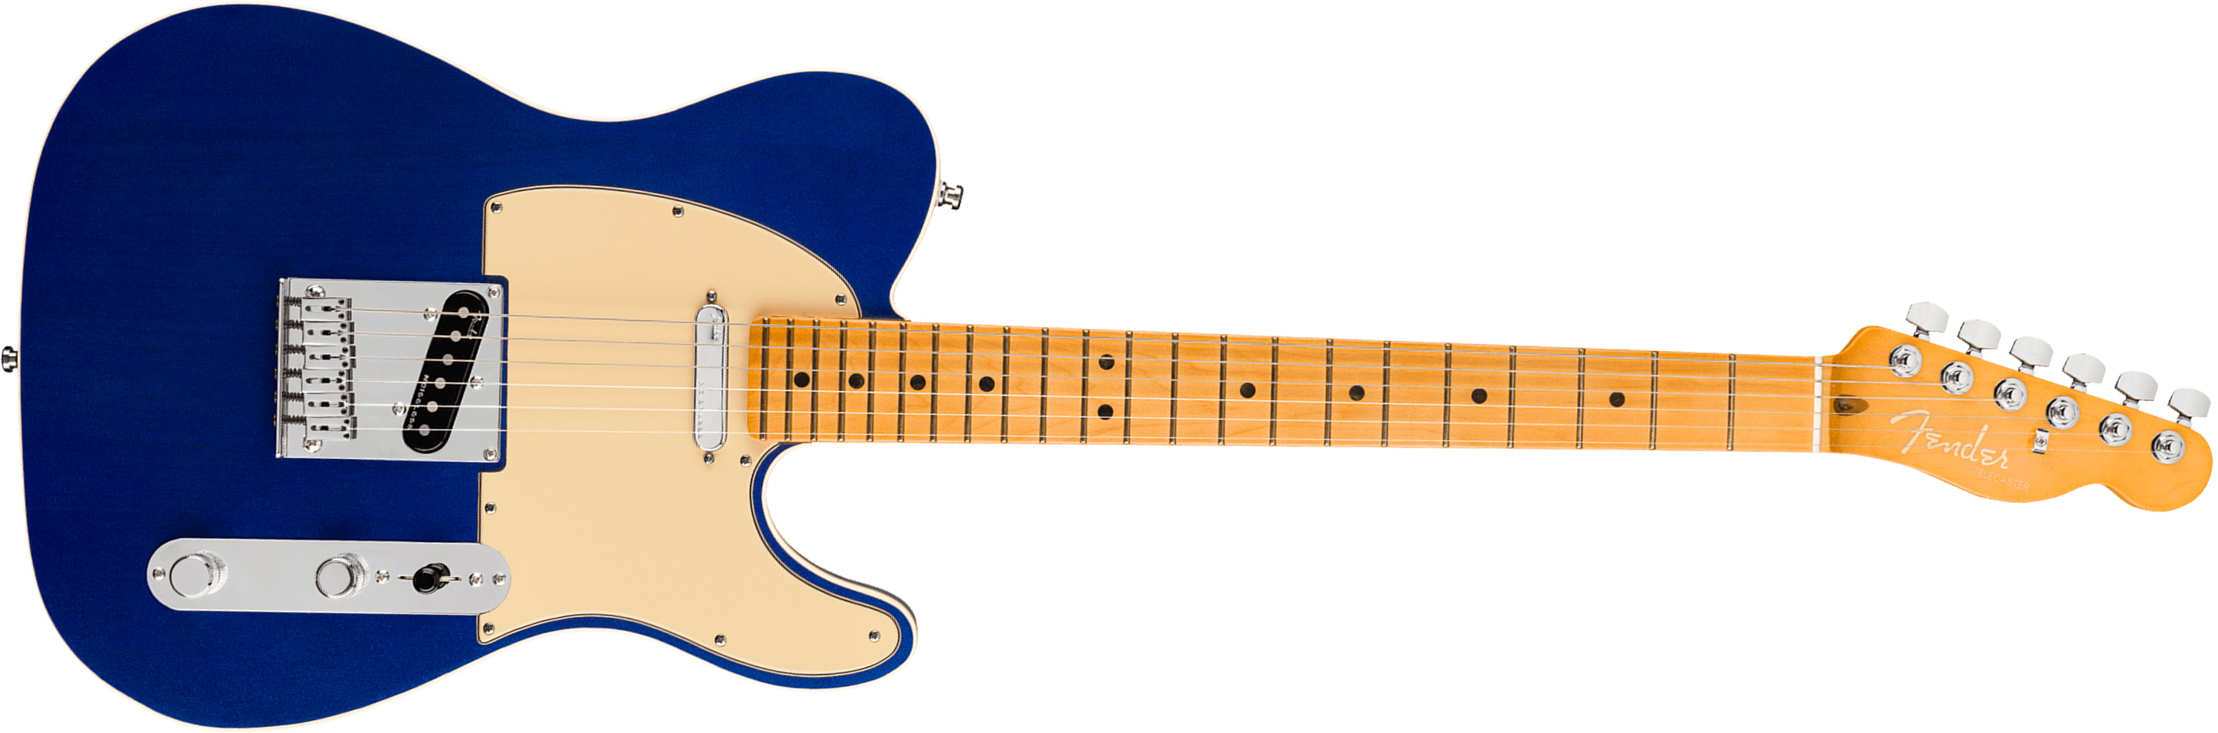 Fender Tele American Ultra 2019 Usa Mn - Cobra Blue - Televorm elektrische gitaar - Main picture